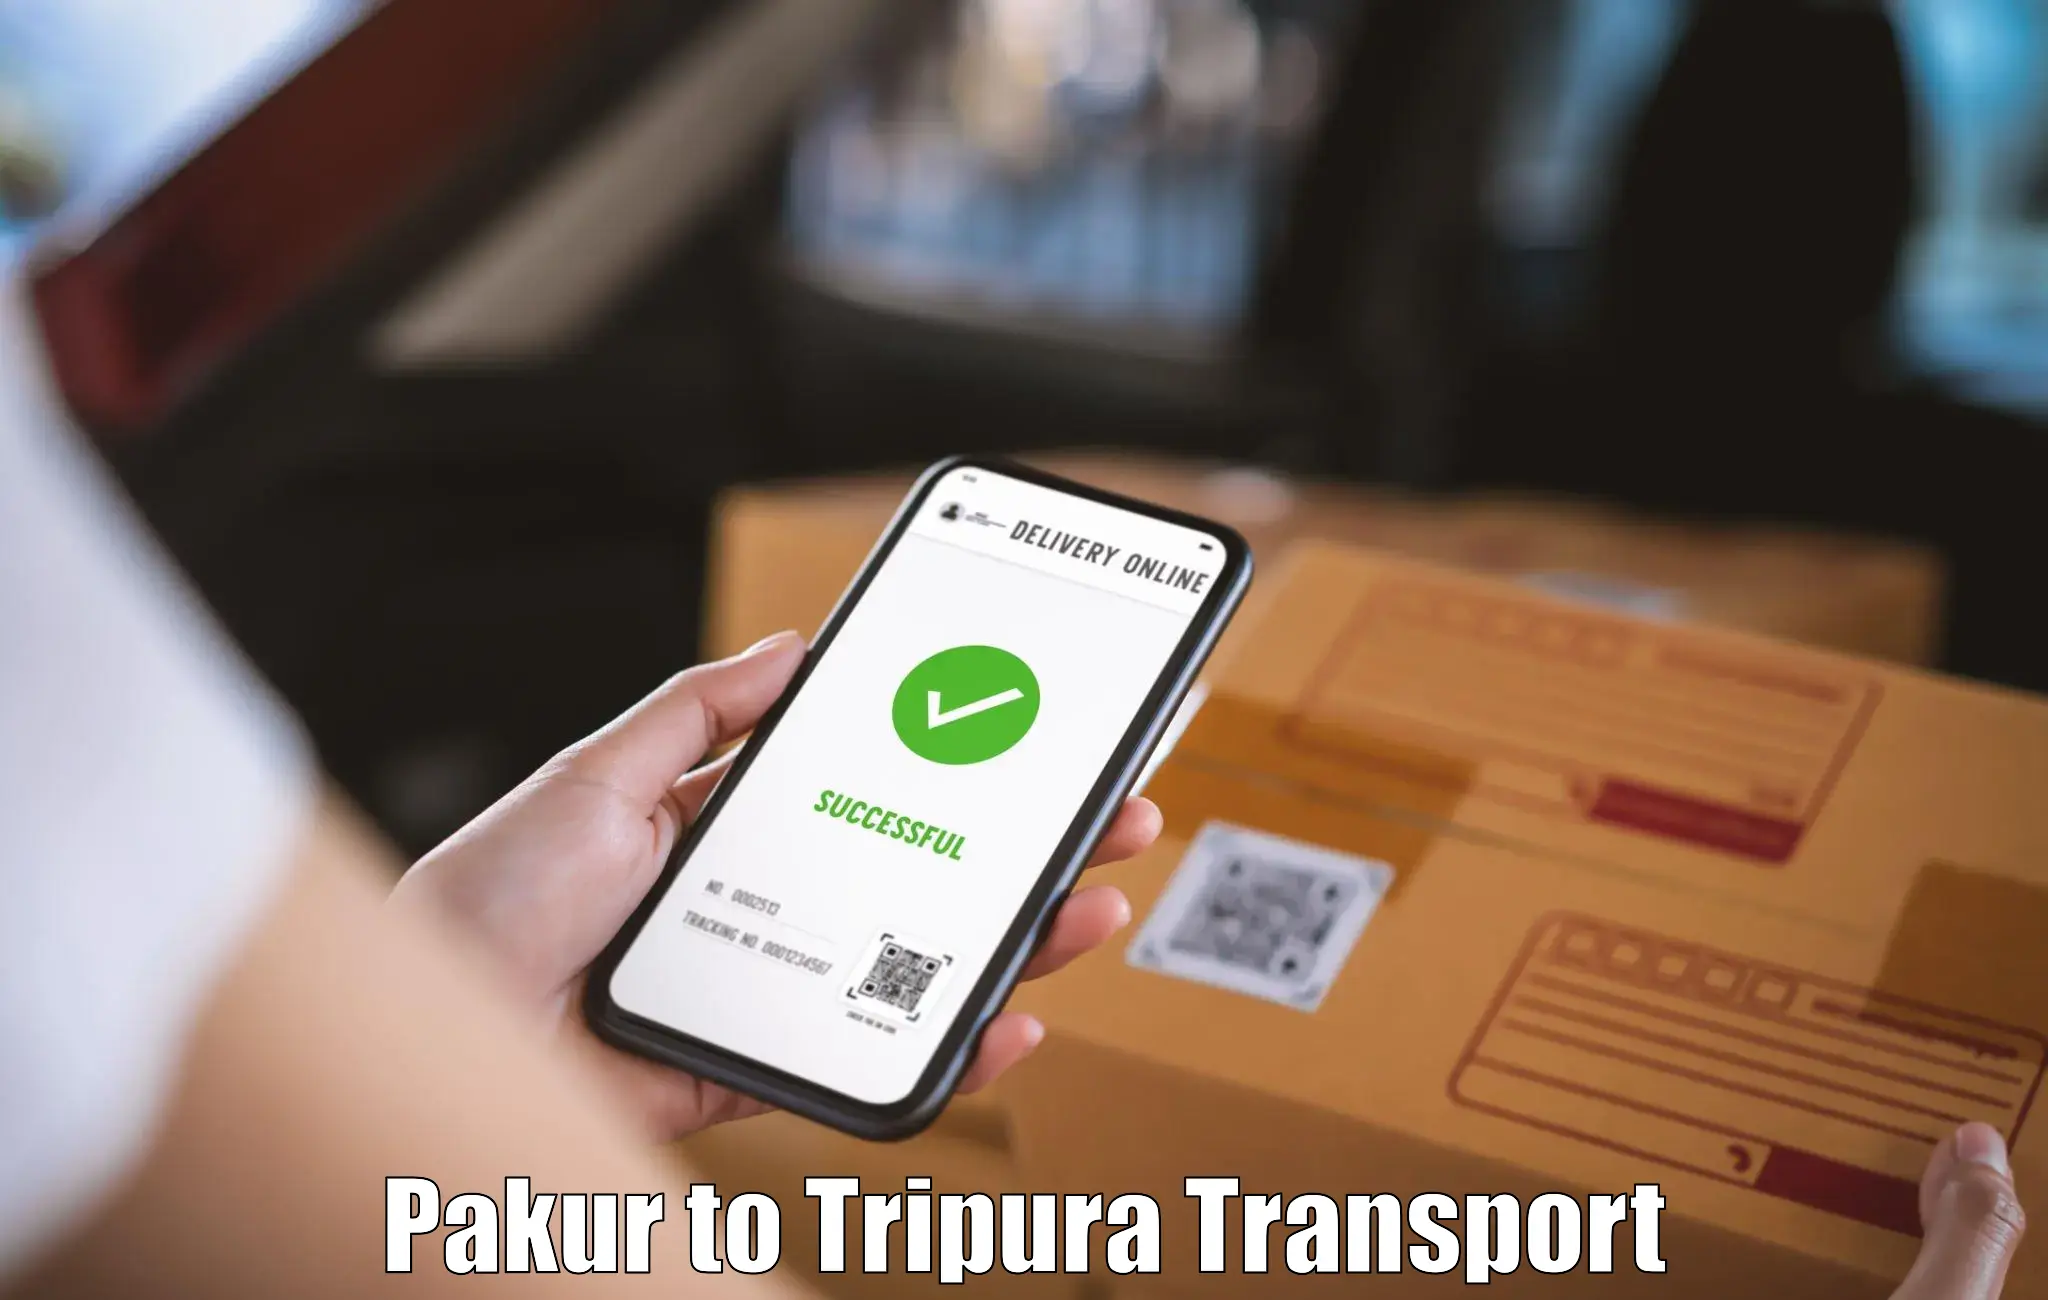 Transport in sharing Pakur to Kailashahar